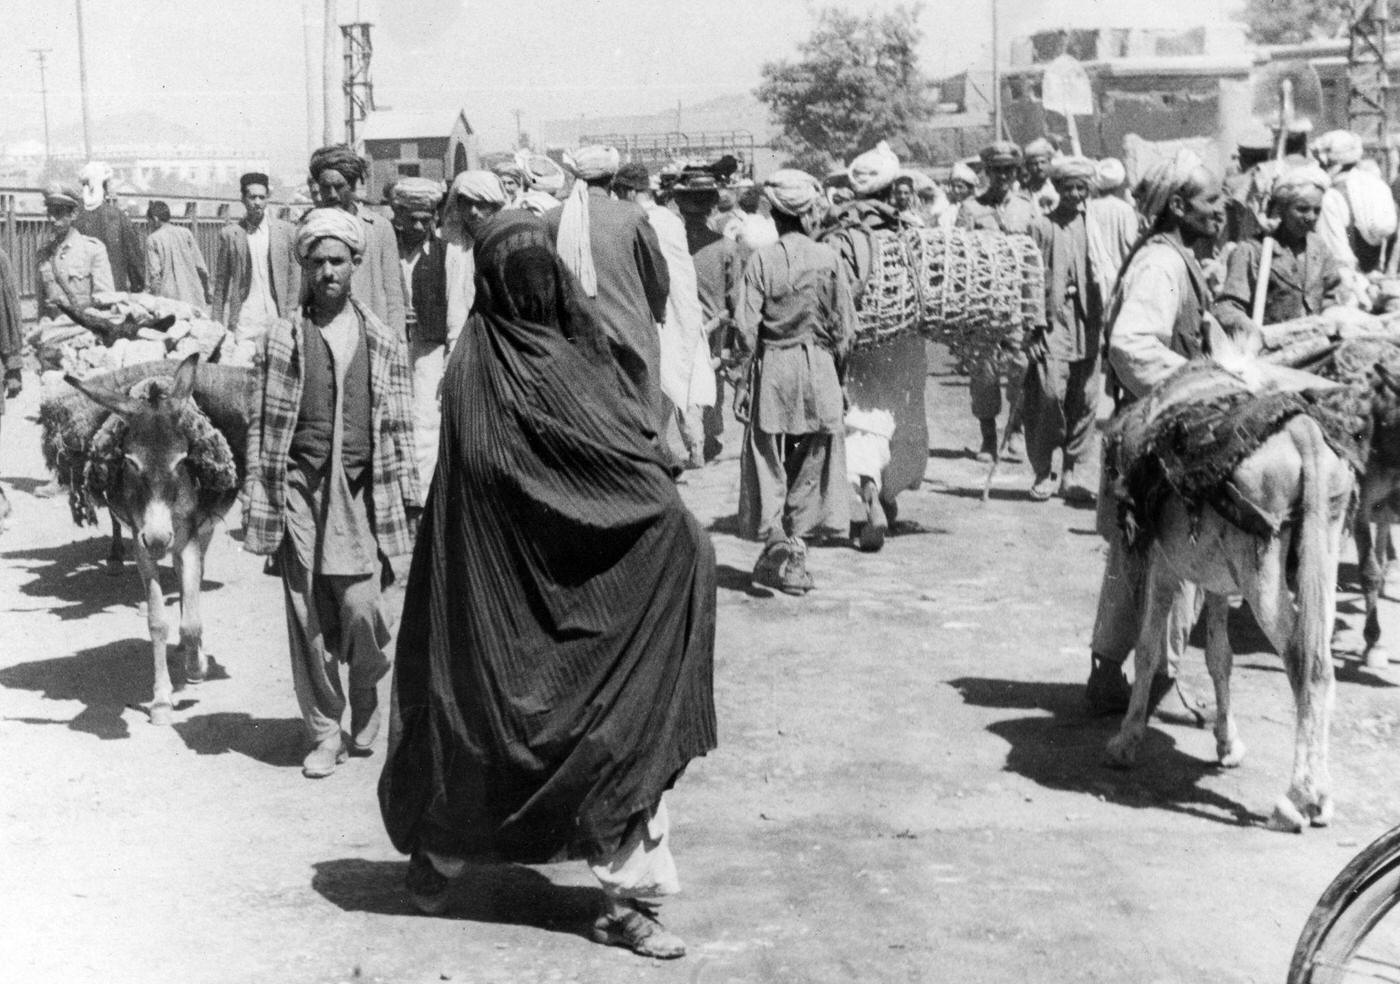 Woman in a full "burkah" on a street full of men, circa 1950s.